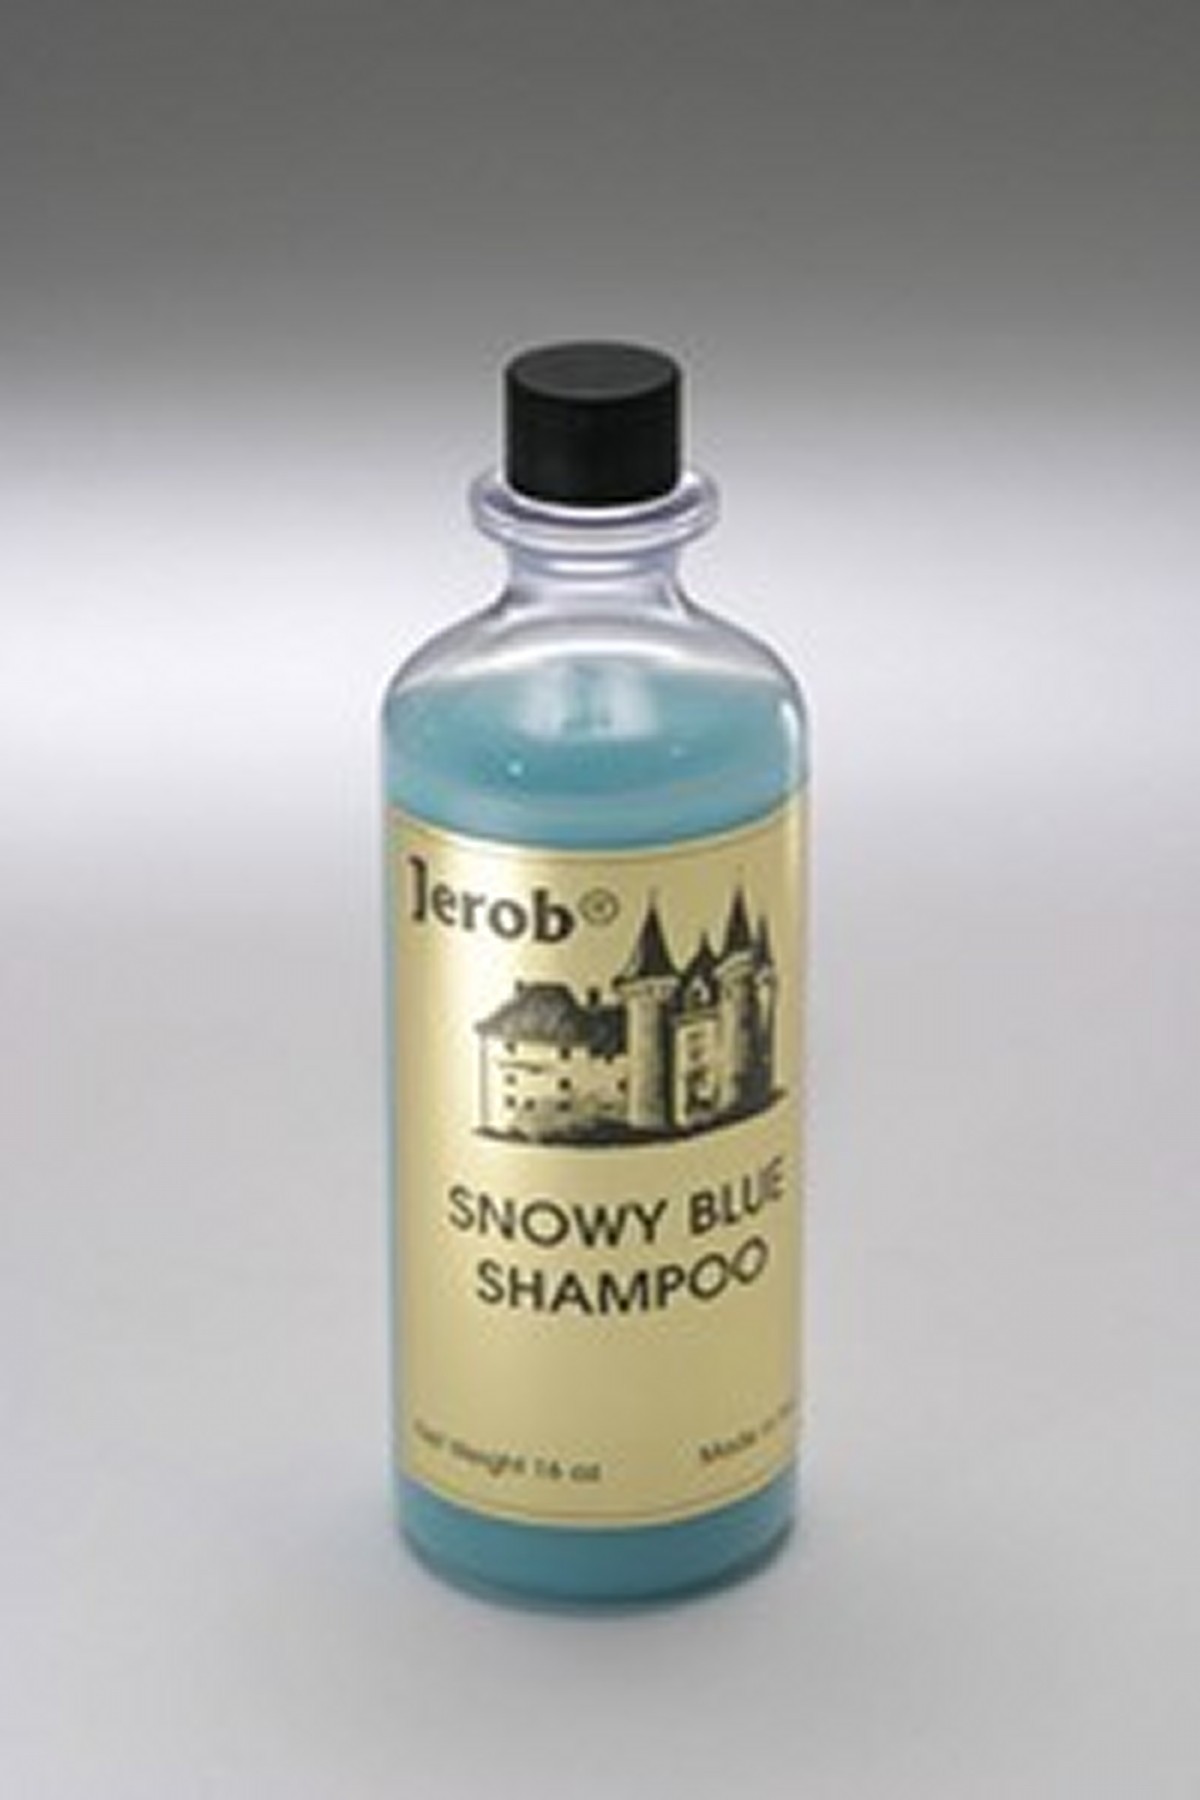 Jerob Shampoo Snowy Blue 236 ml